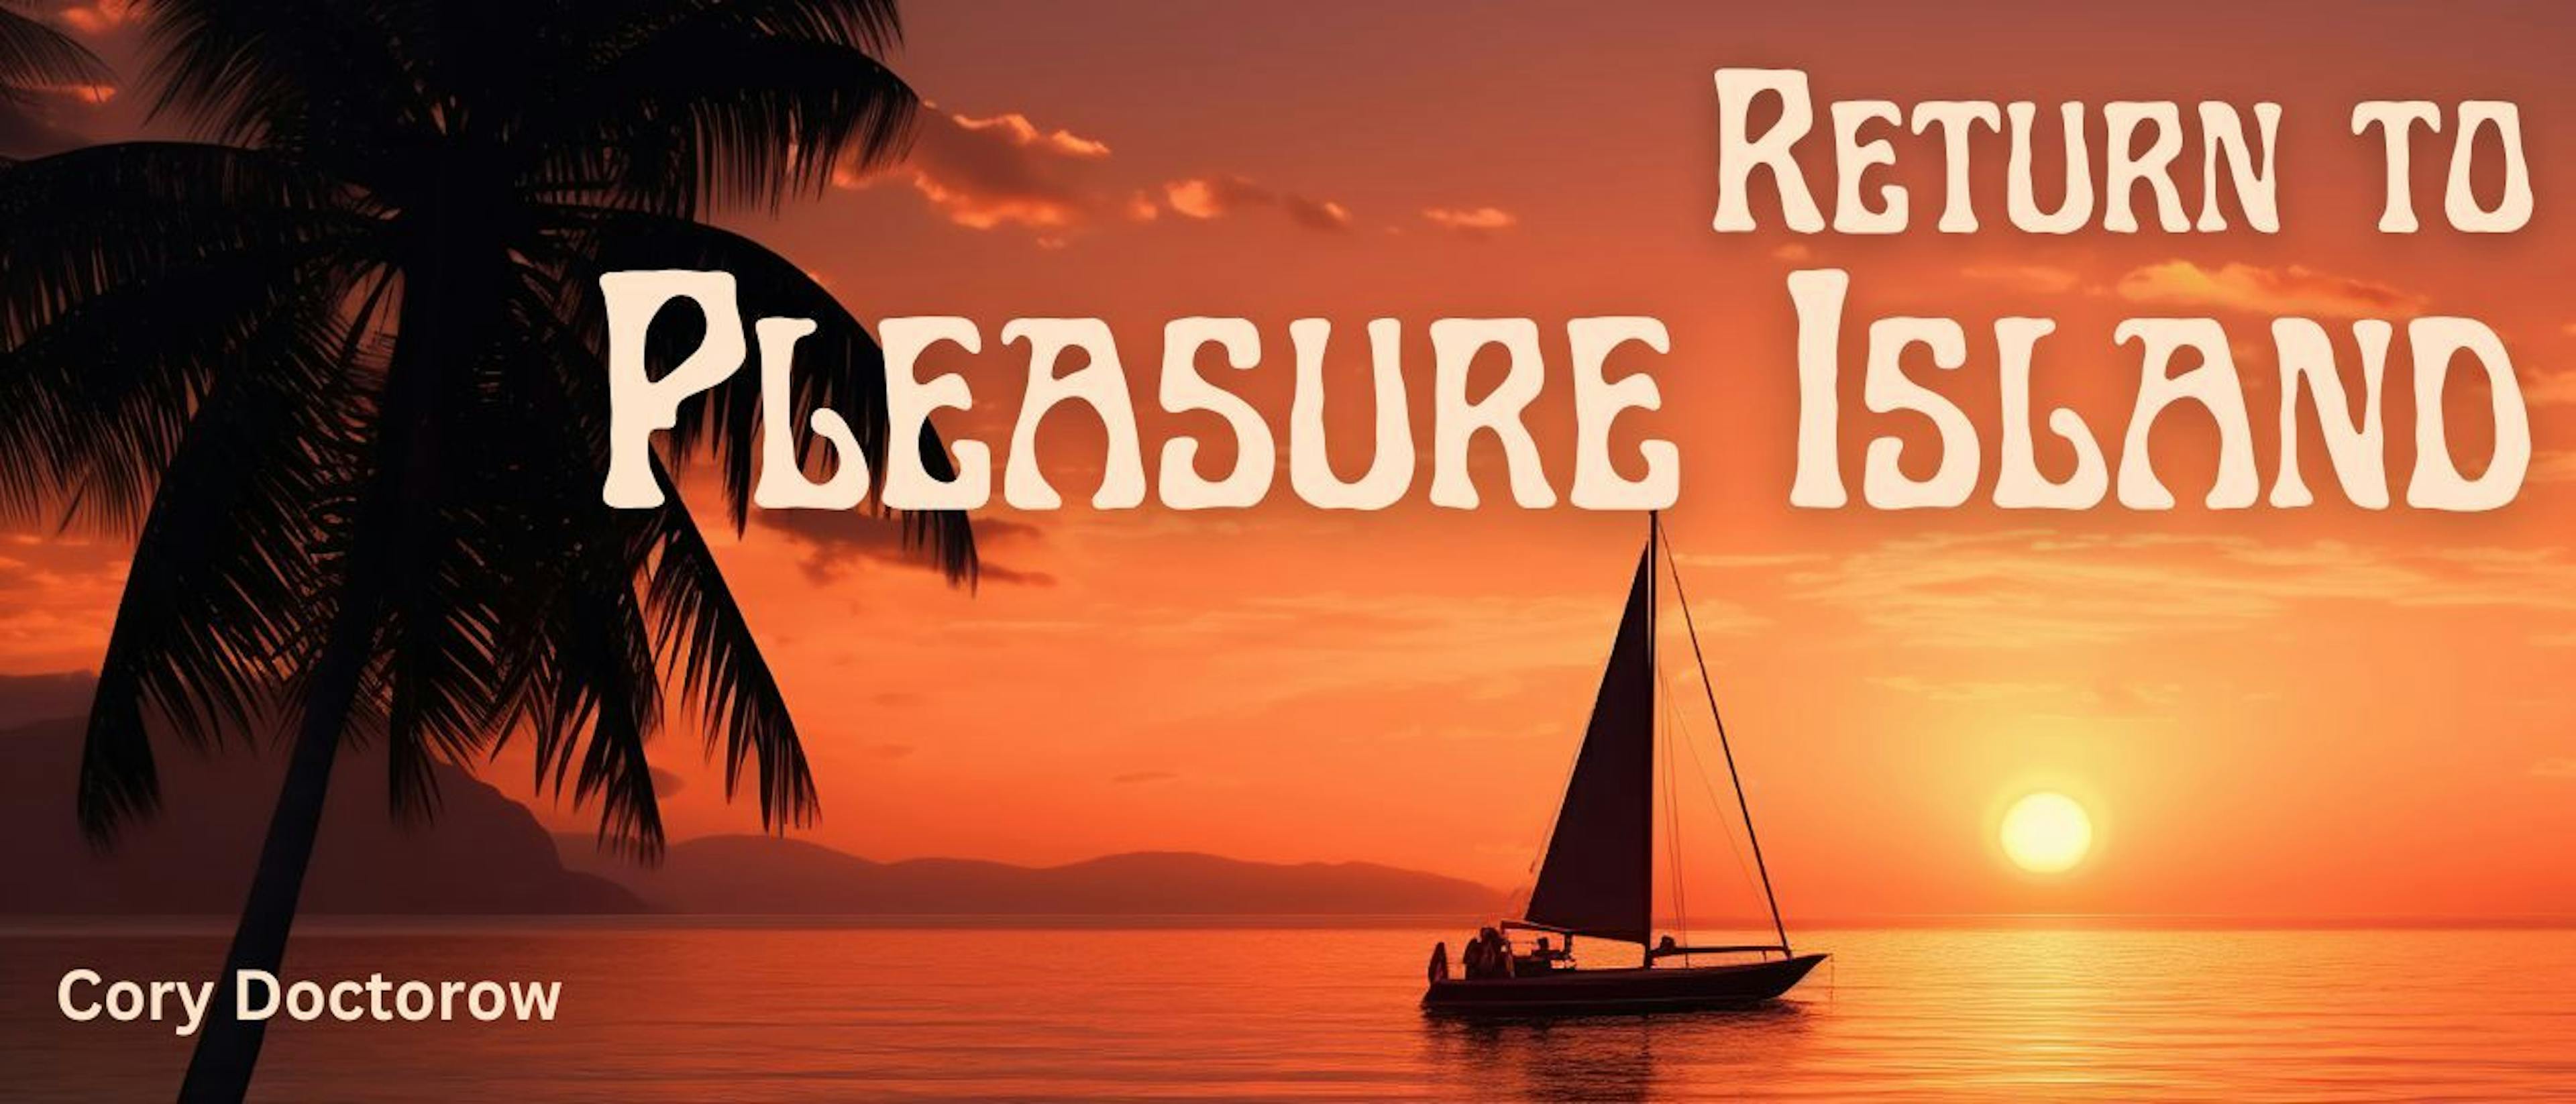 featured image - Return to Pleasure Island